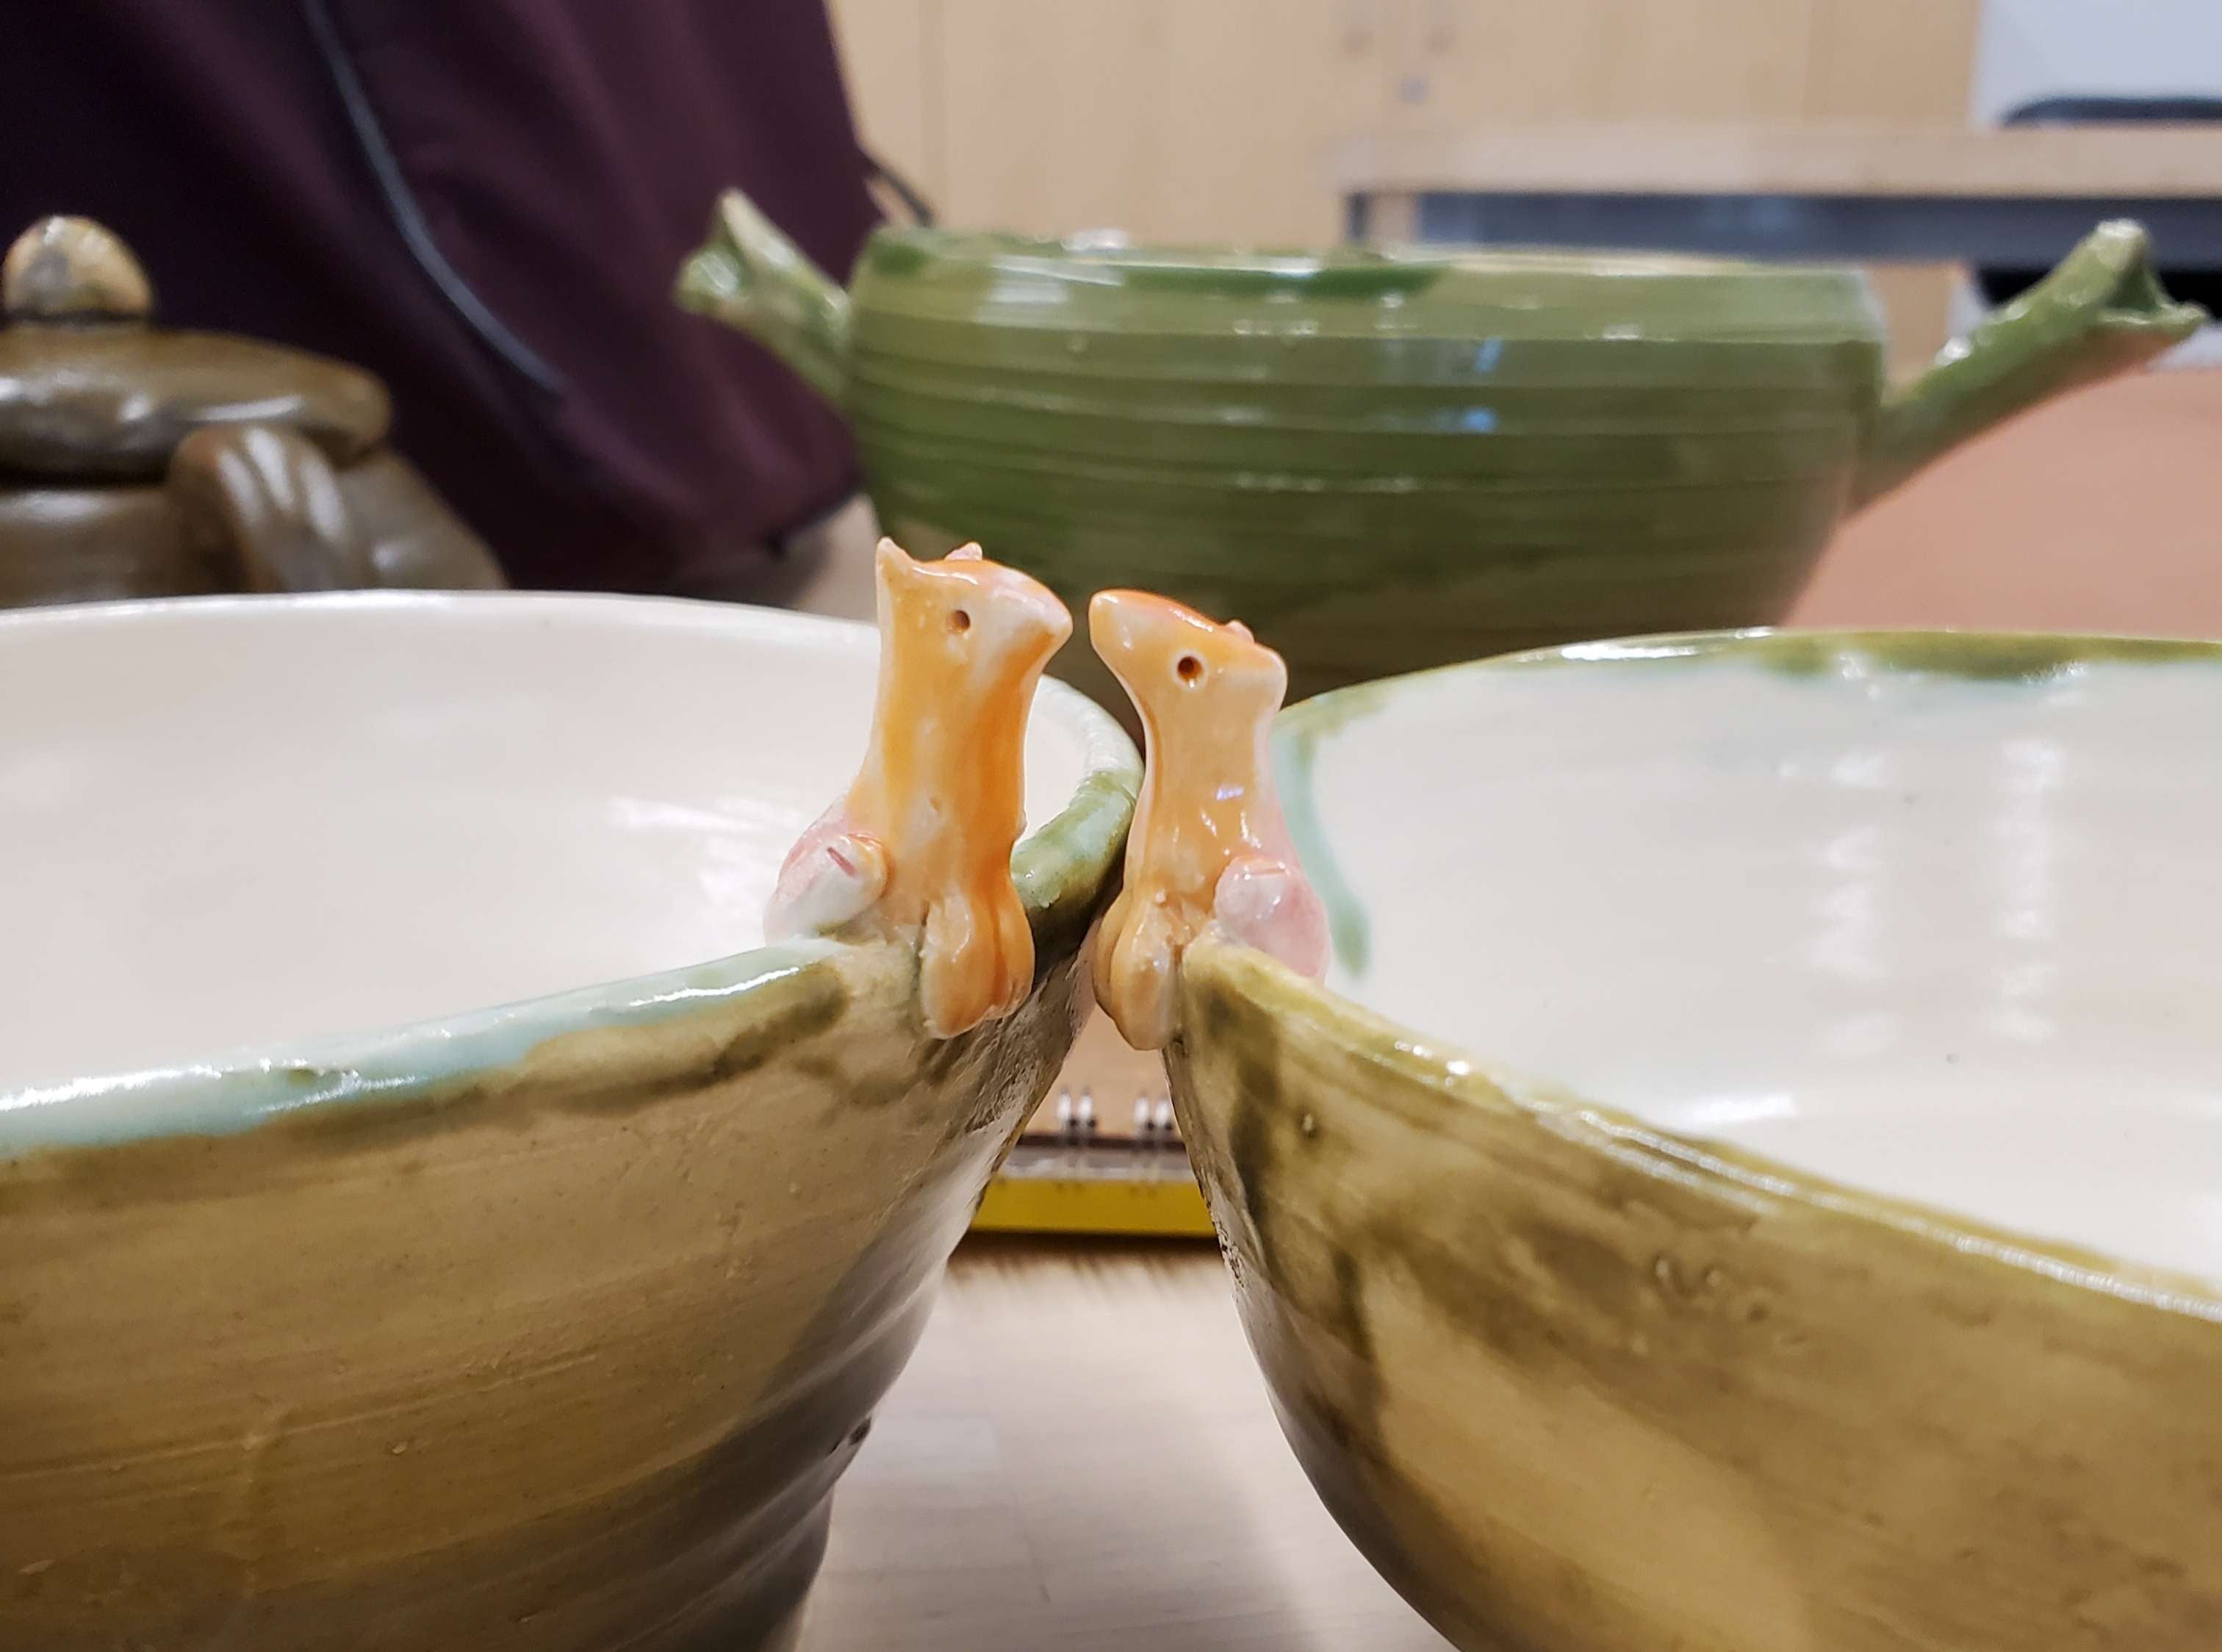 Creature bowls